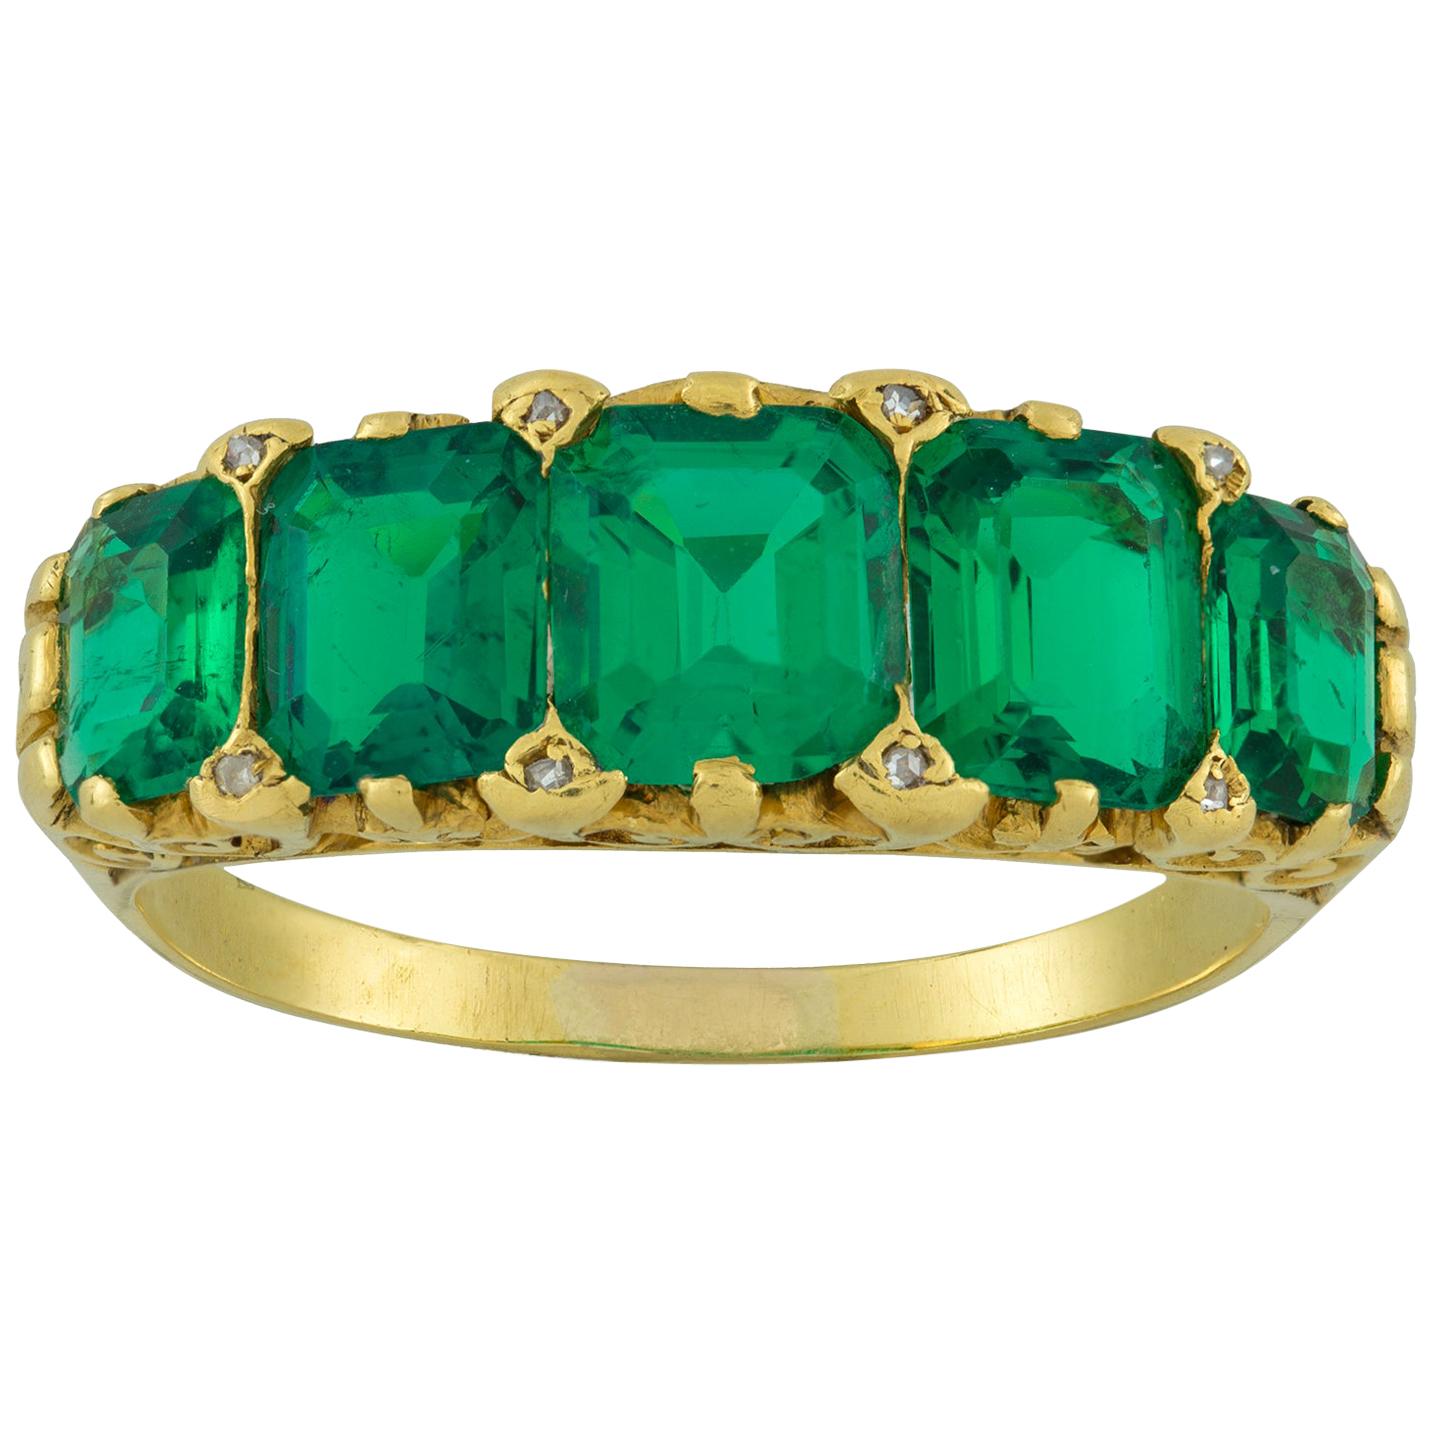 Important Victorian Five-Stone Emerald Ring